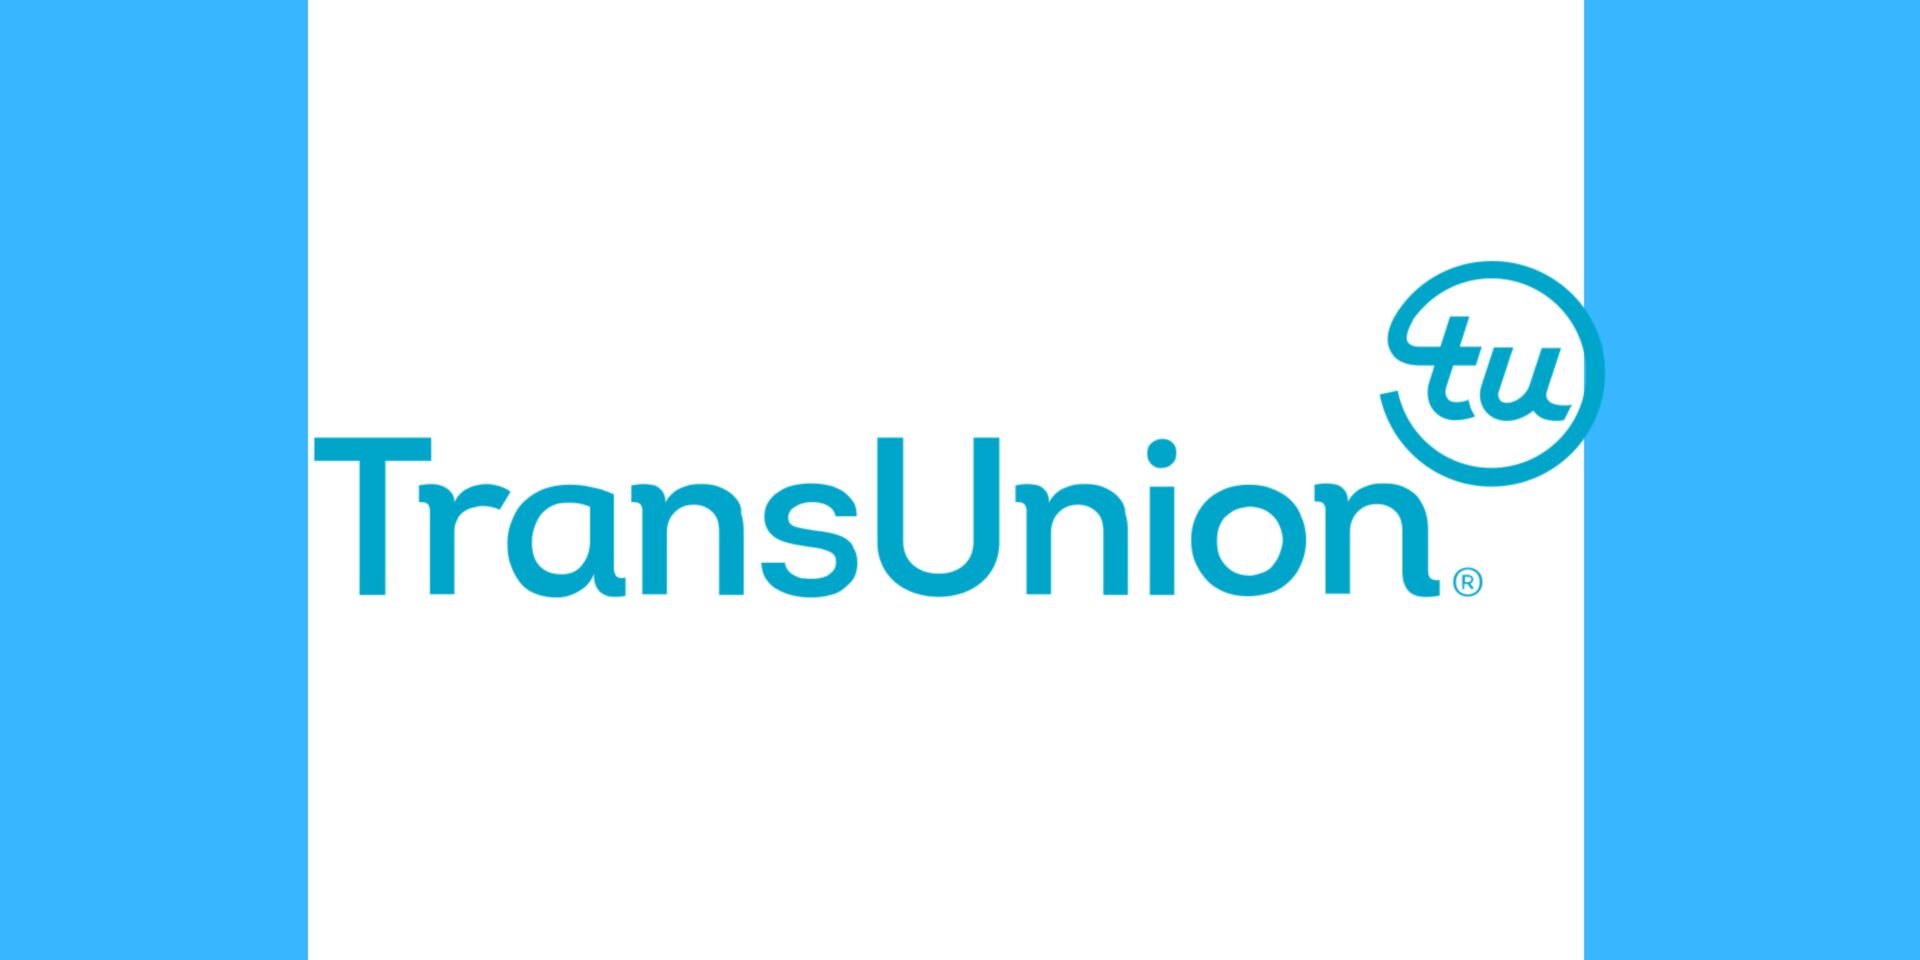 TransUnion Announces New Risk Management Tool